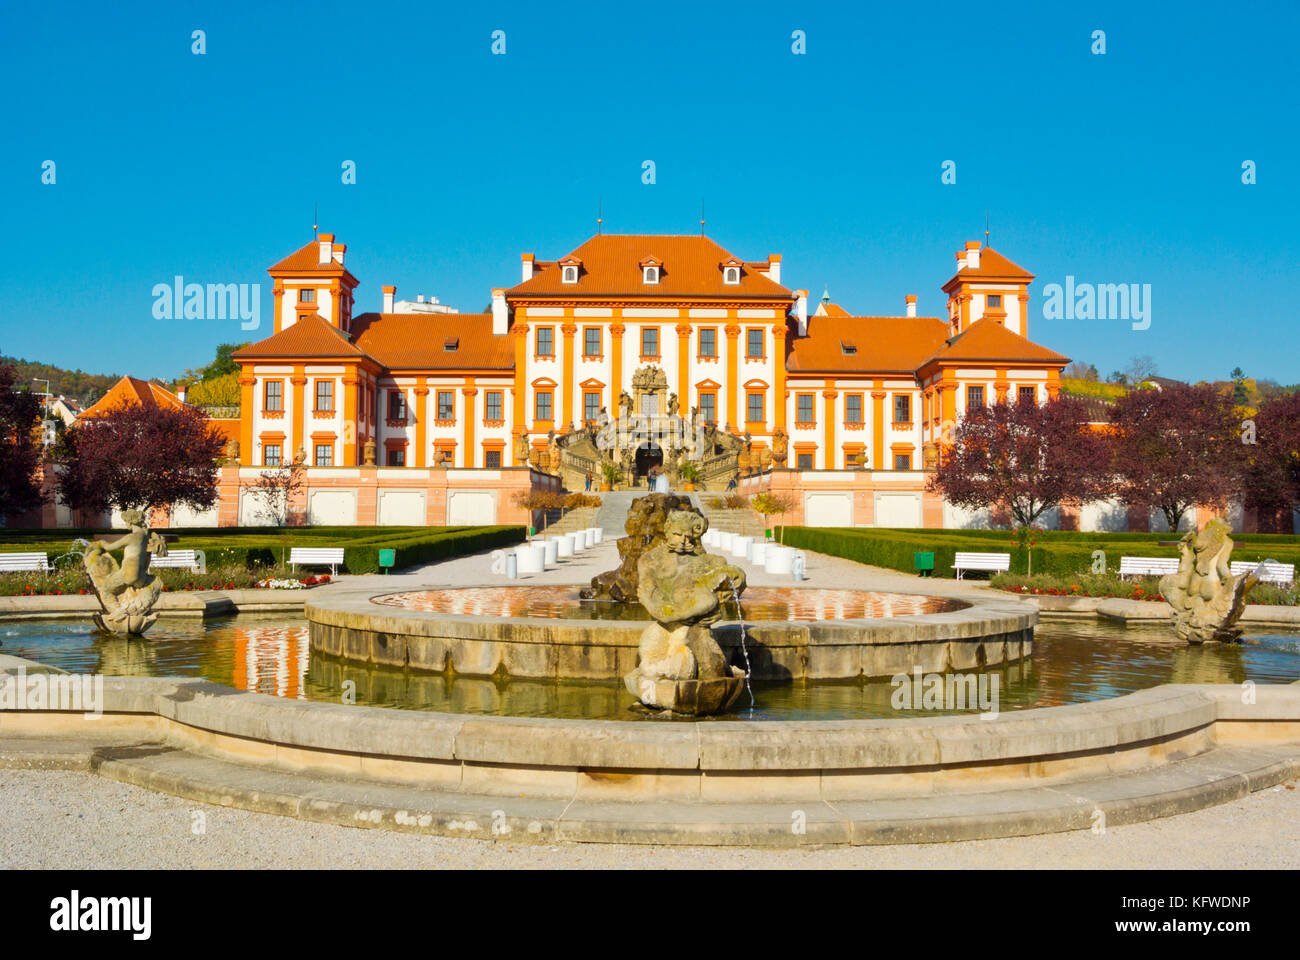 Trojsky Zamek, Troja, Palast, von 1691, Troja, Prag, Tschechische Republik Stockfoto